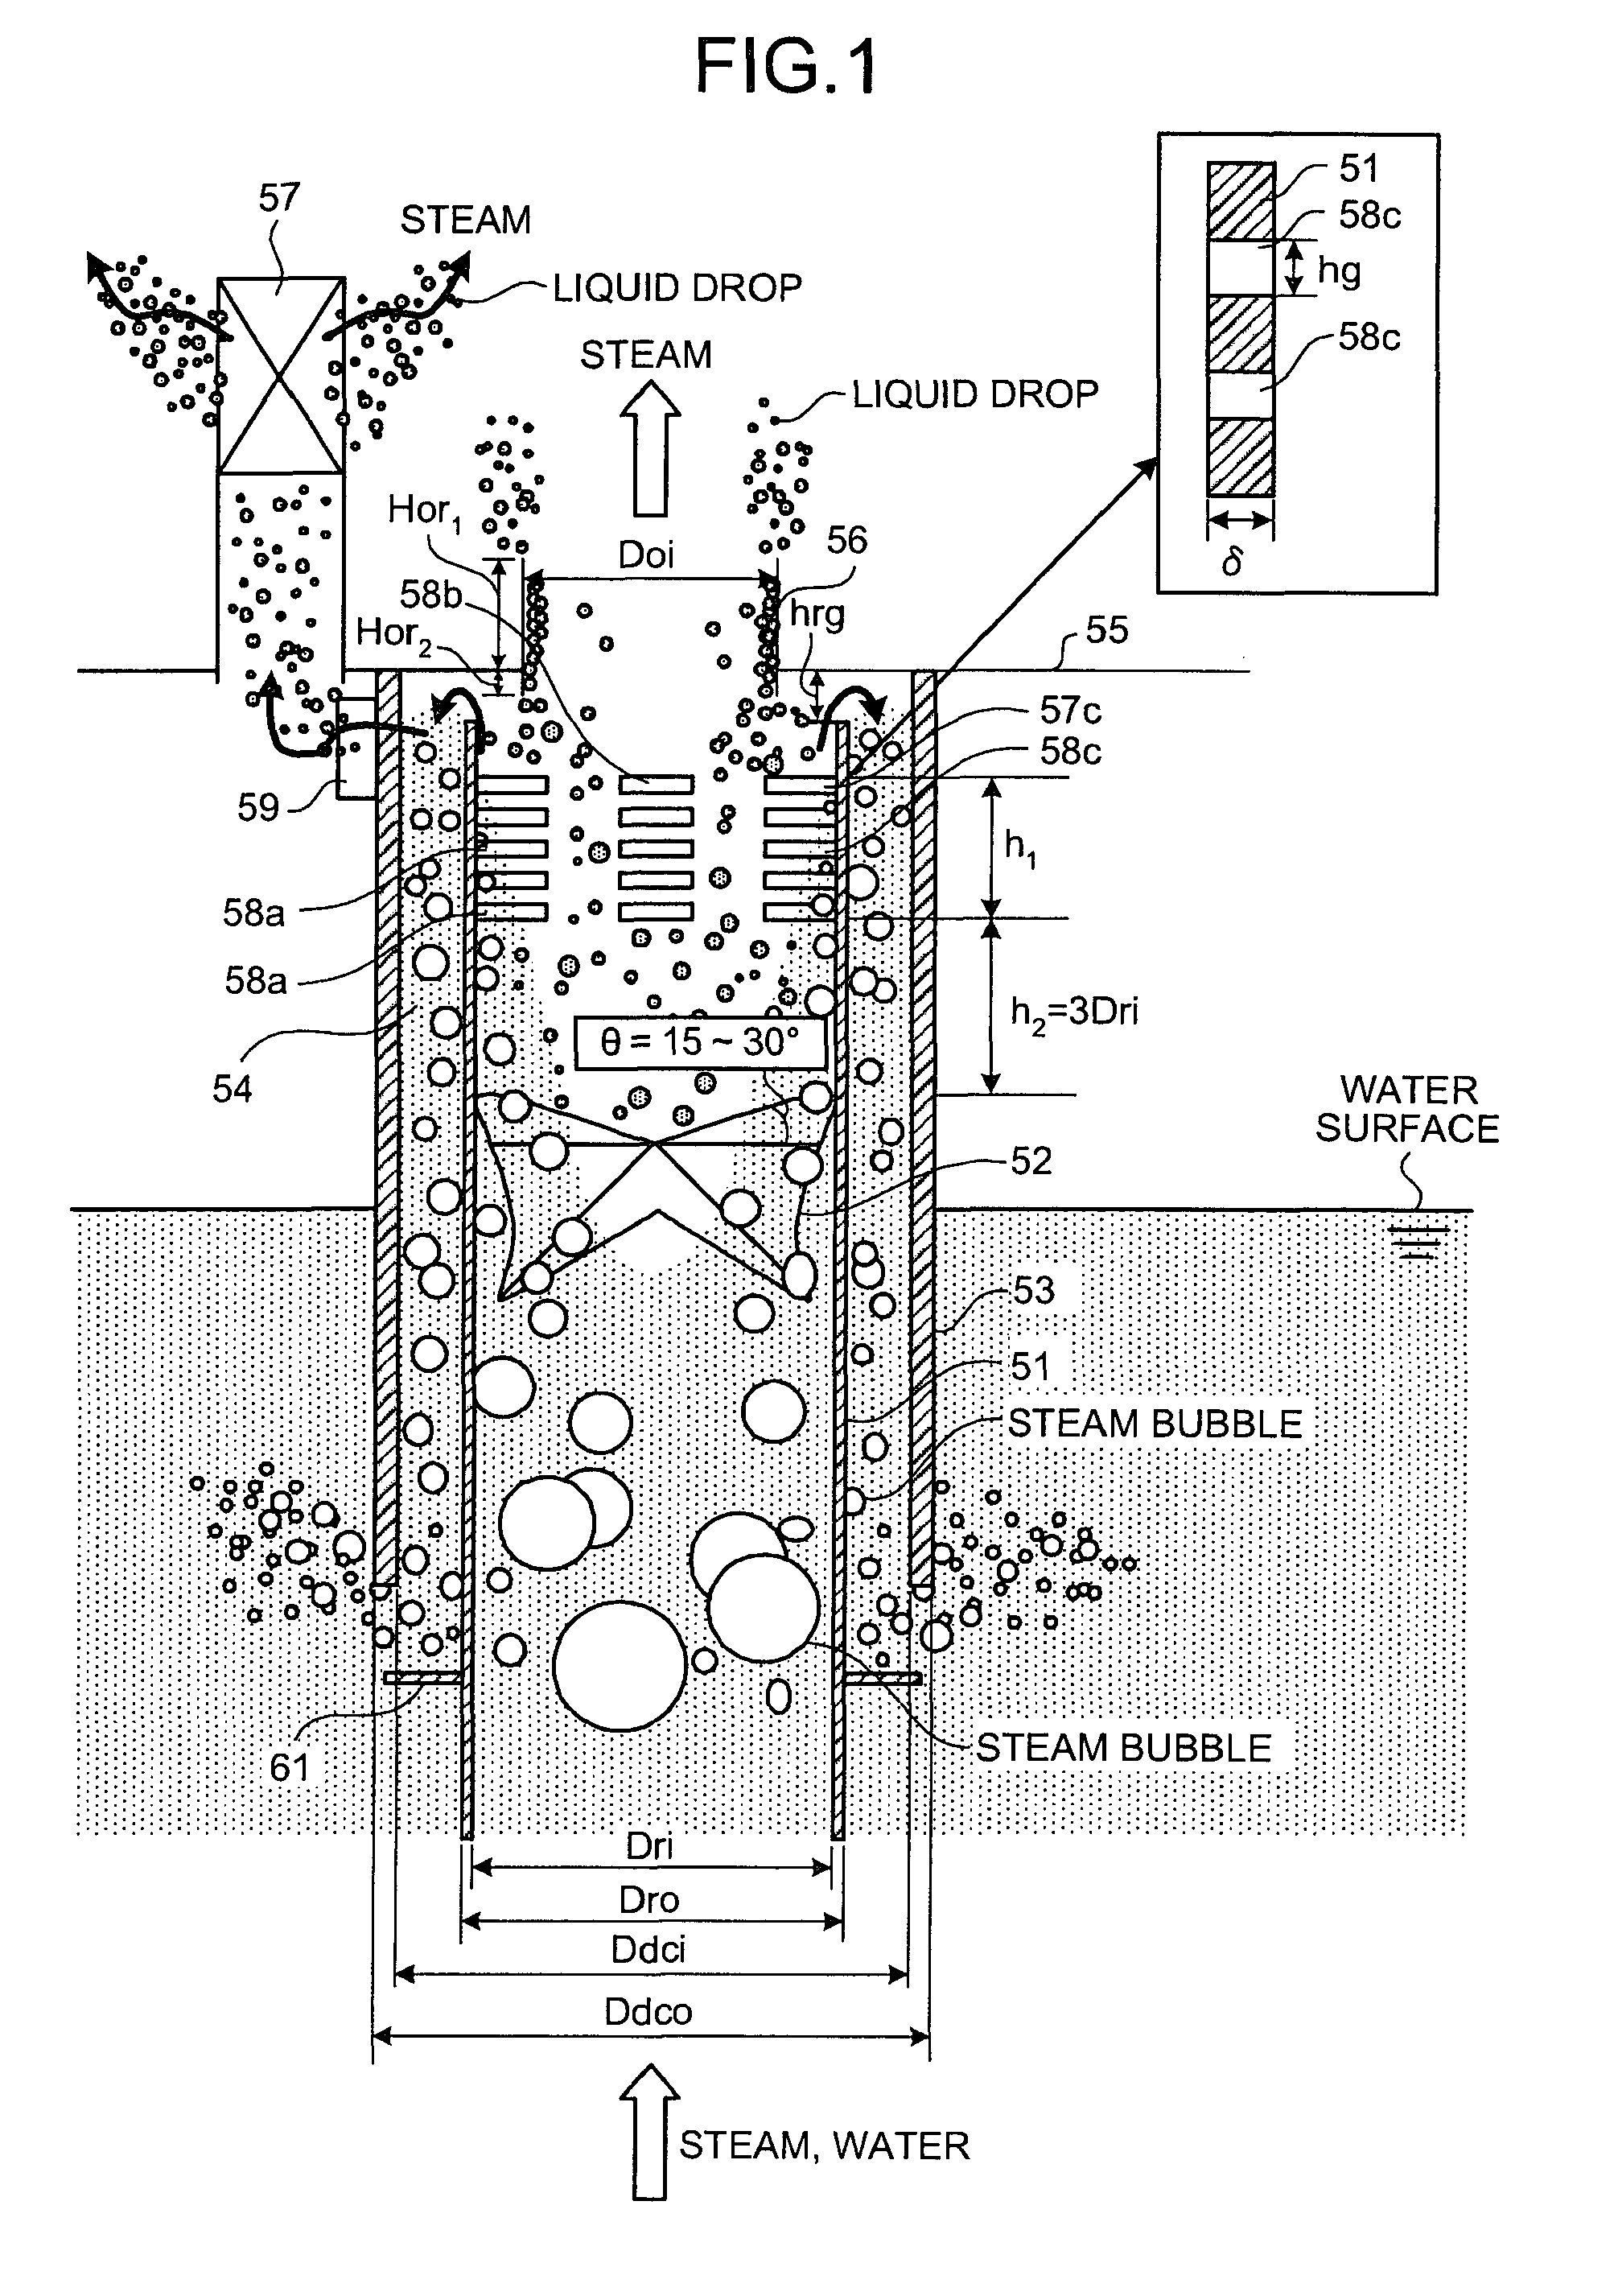 Steam-water separator